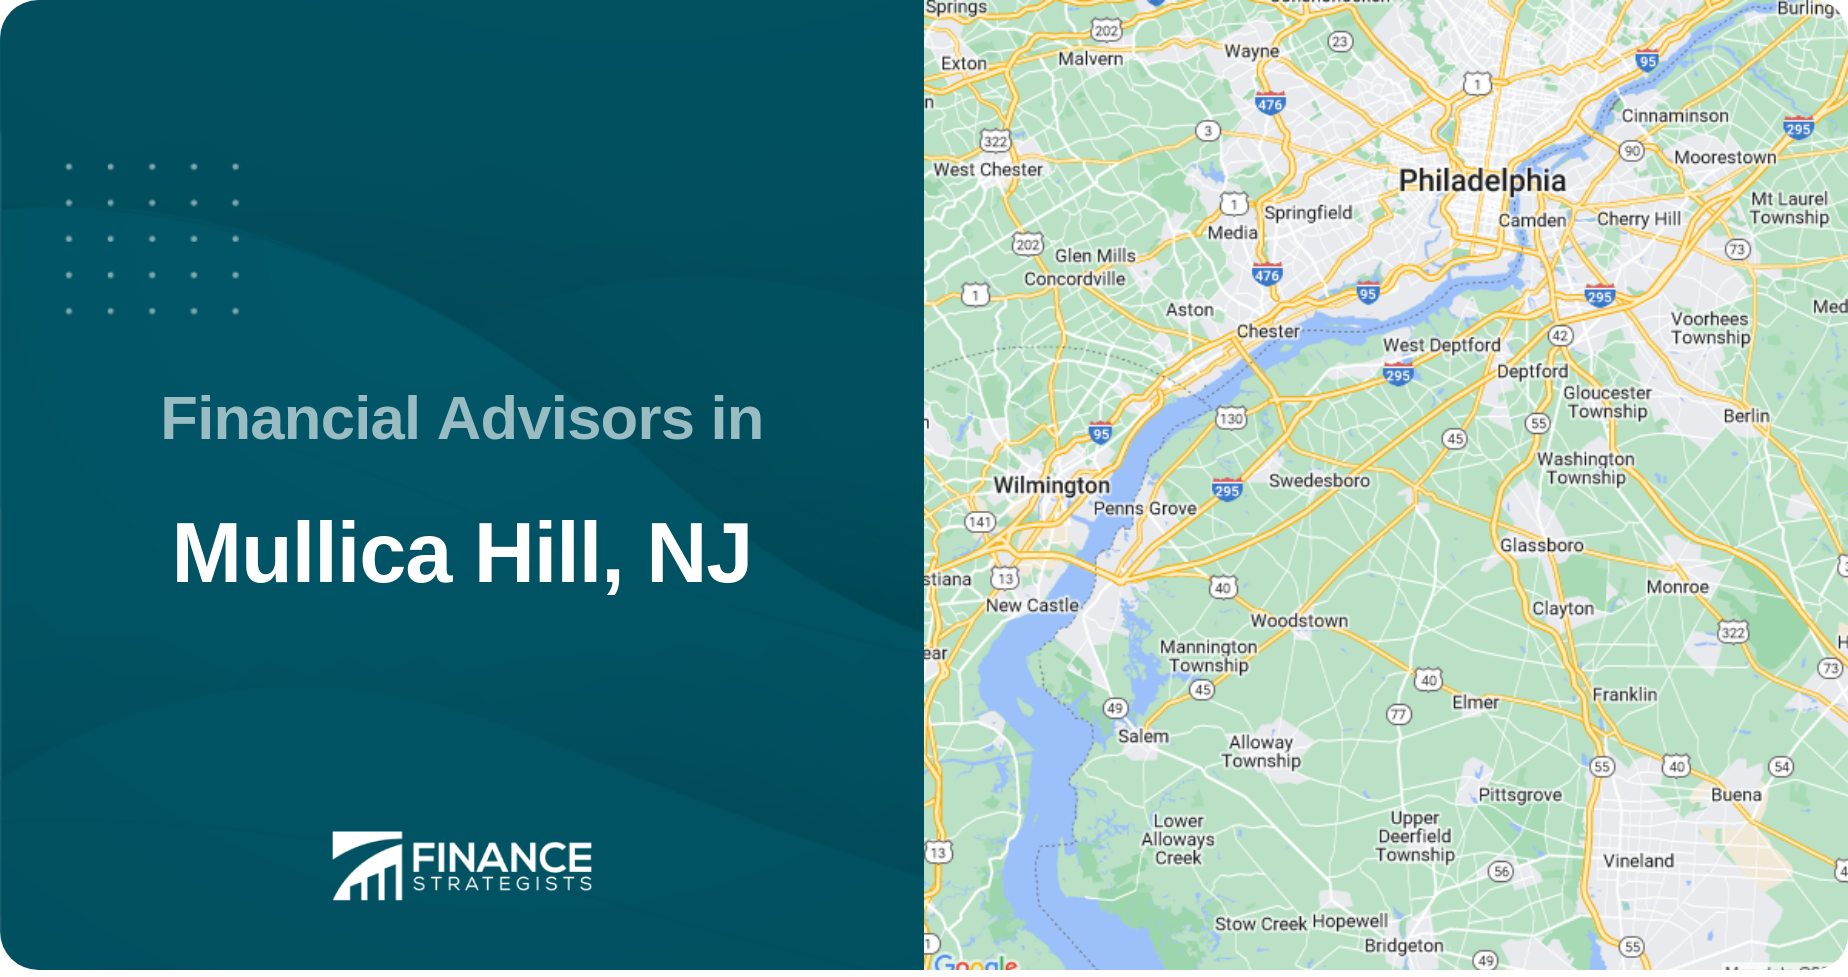 Financial Advisors in Mullica Hill, NJ